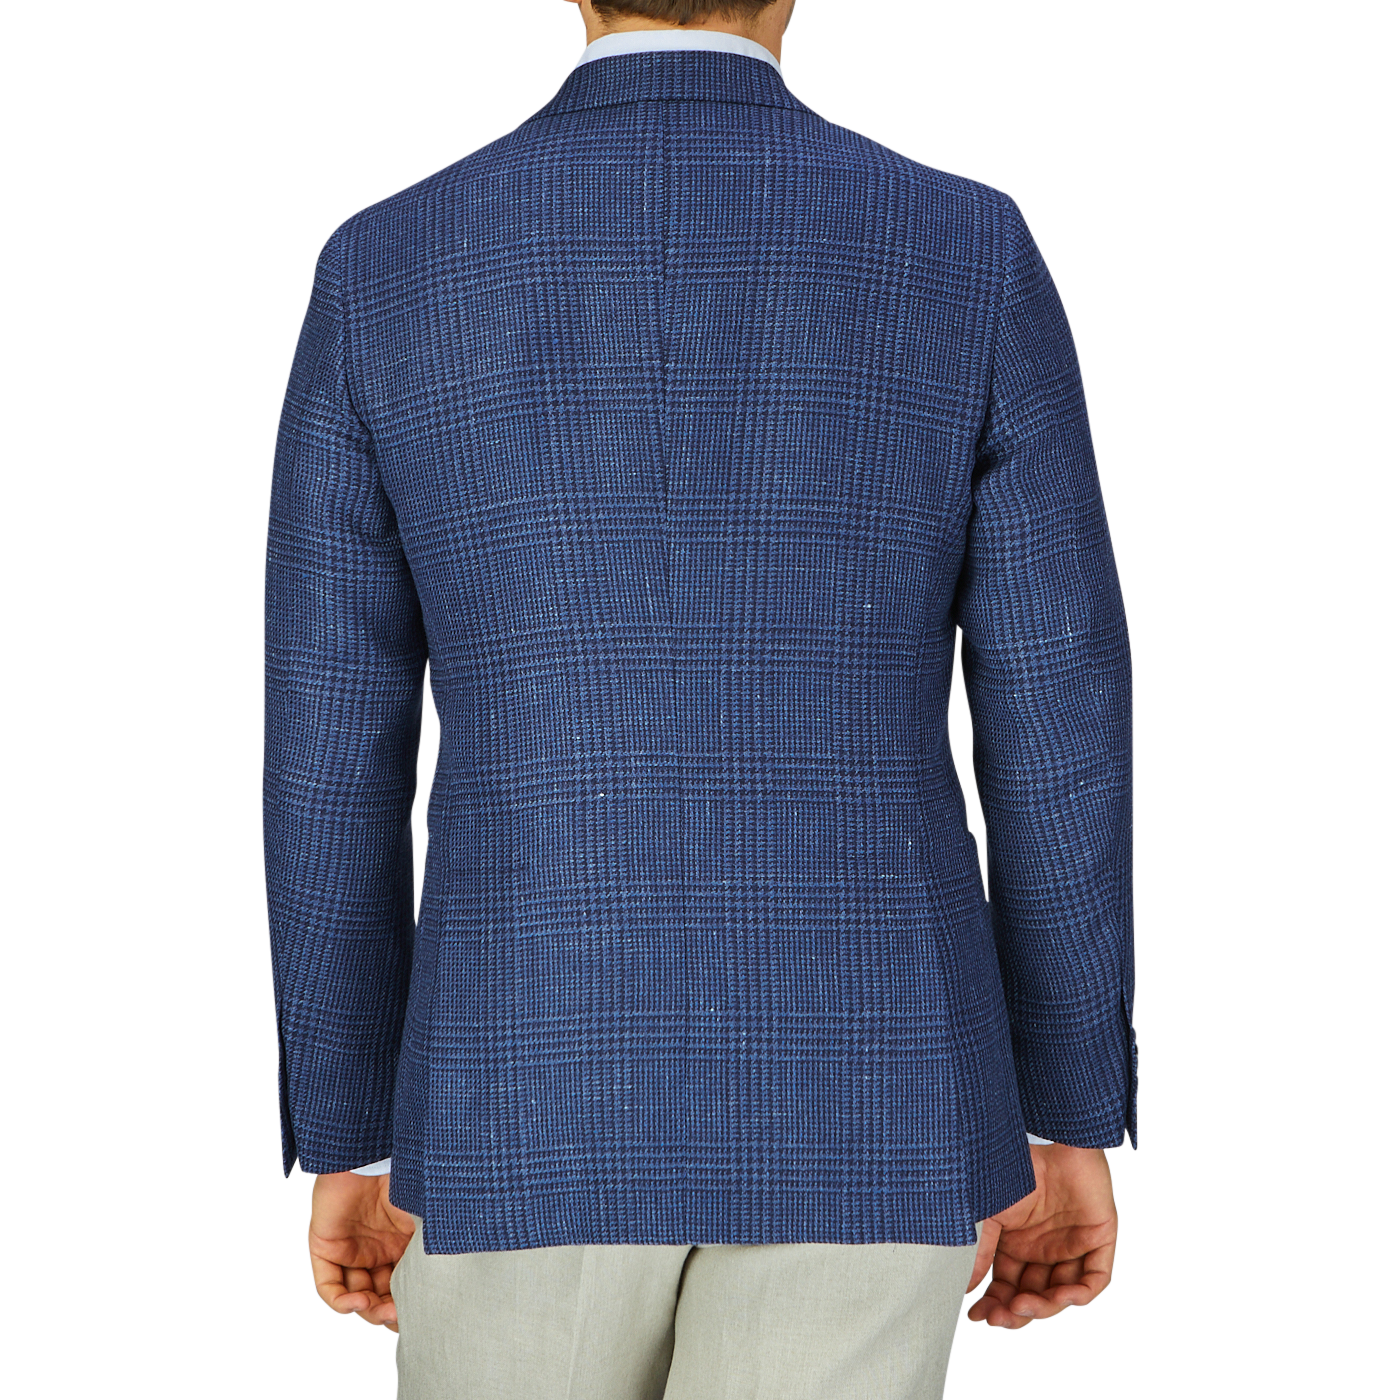 Rear view of a person wearing a blue Studio 73 Dark Blue Checked Wool Linen Blazer.